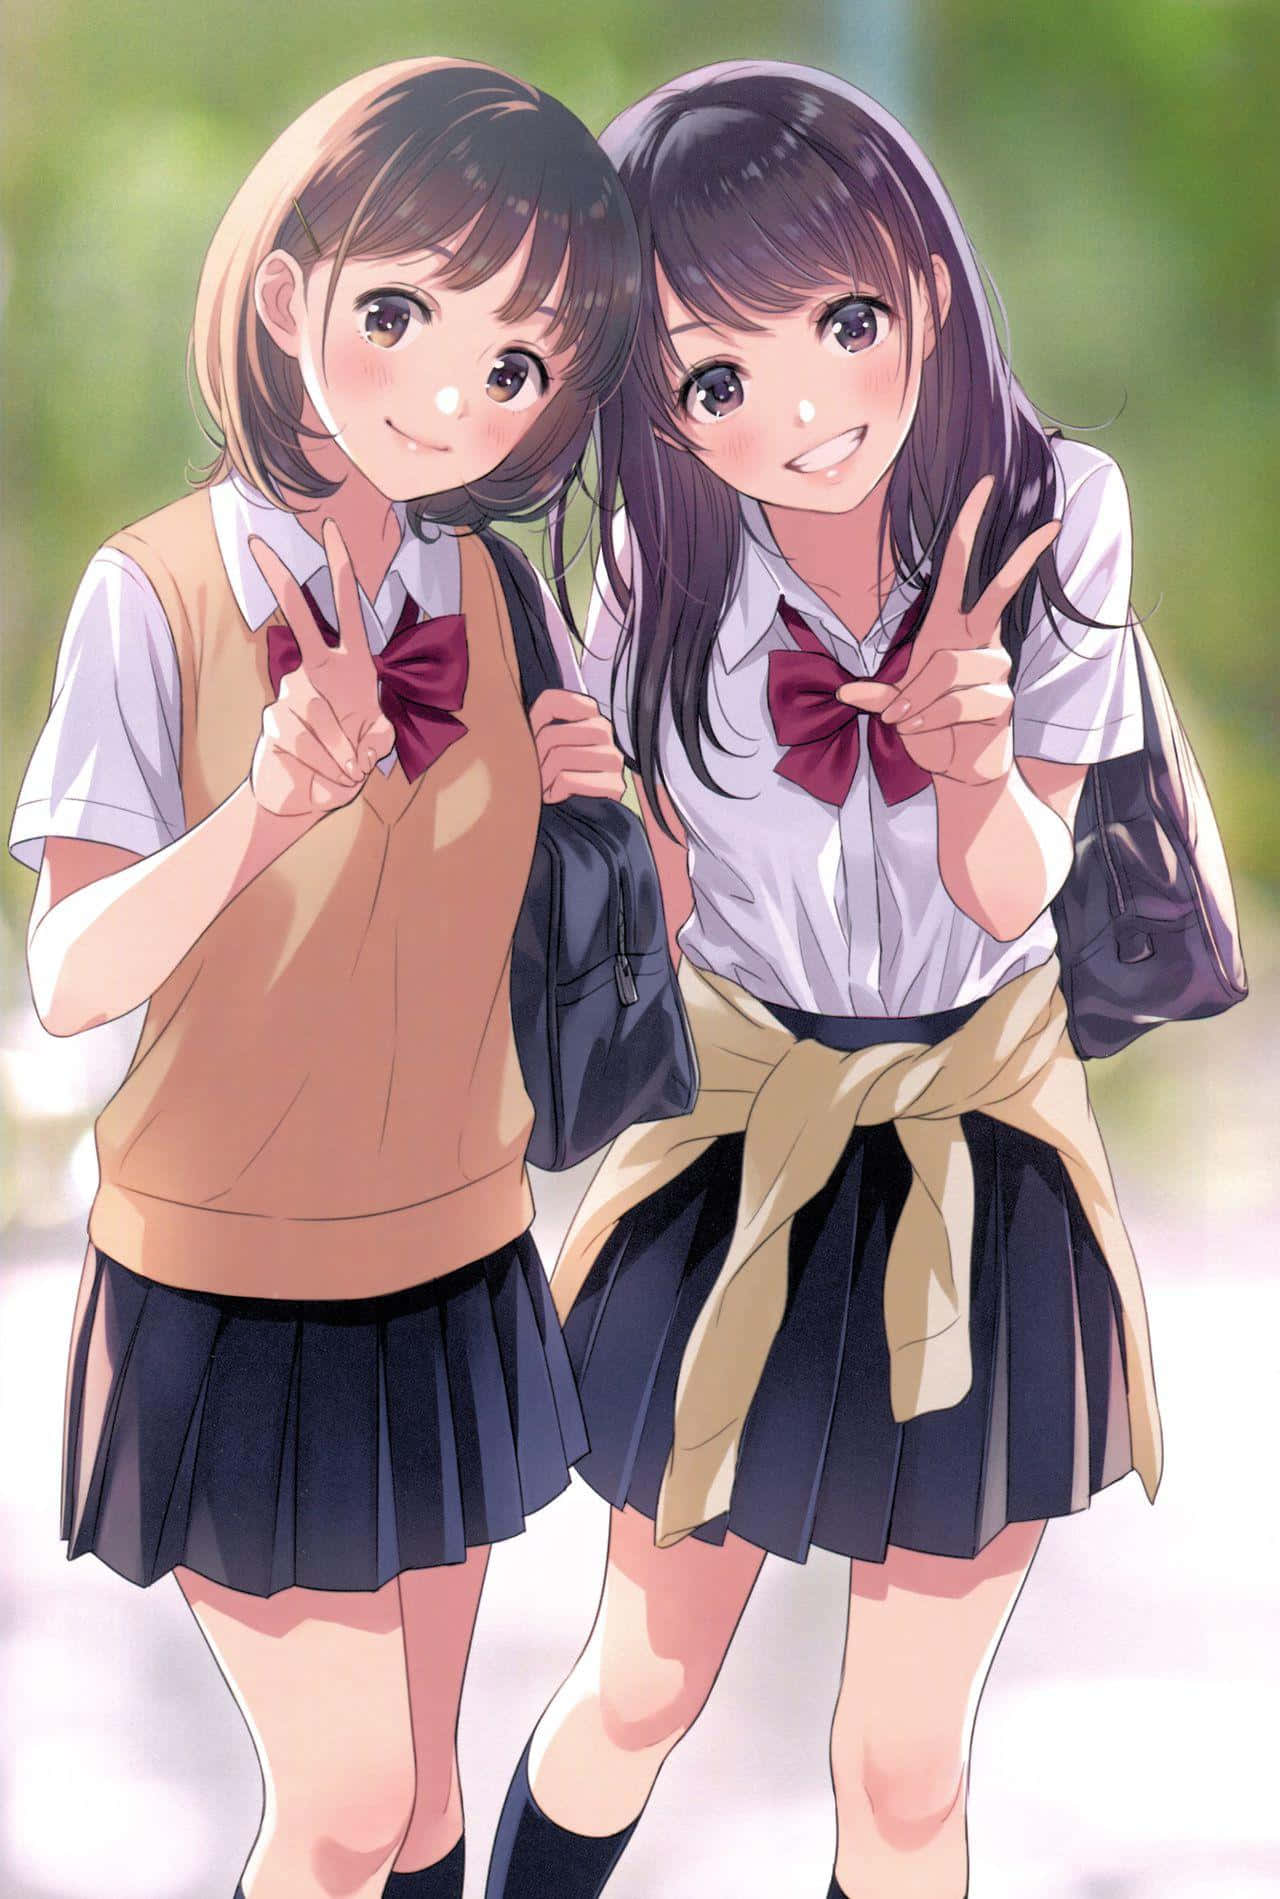 A Cute and Kawaii Anime Girl Wallpaper